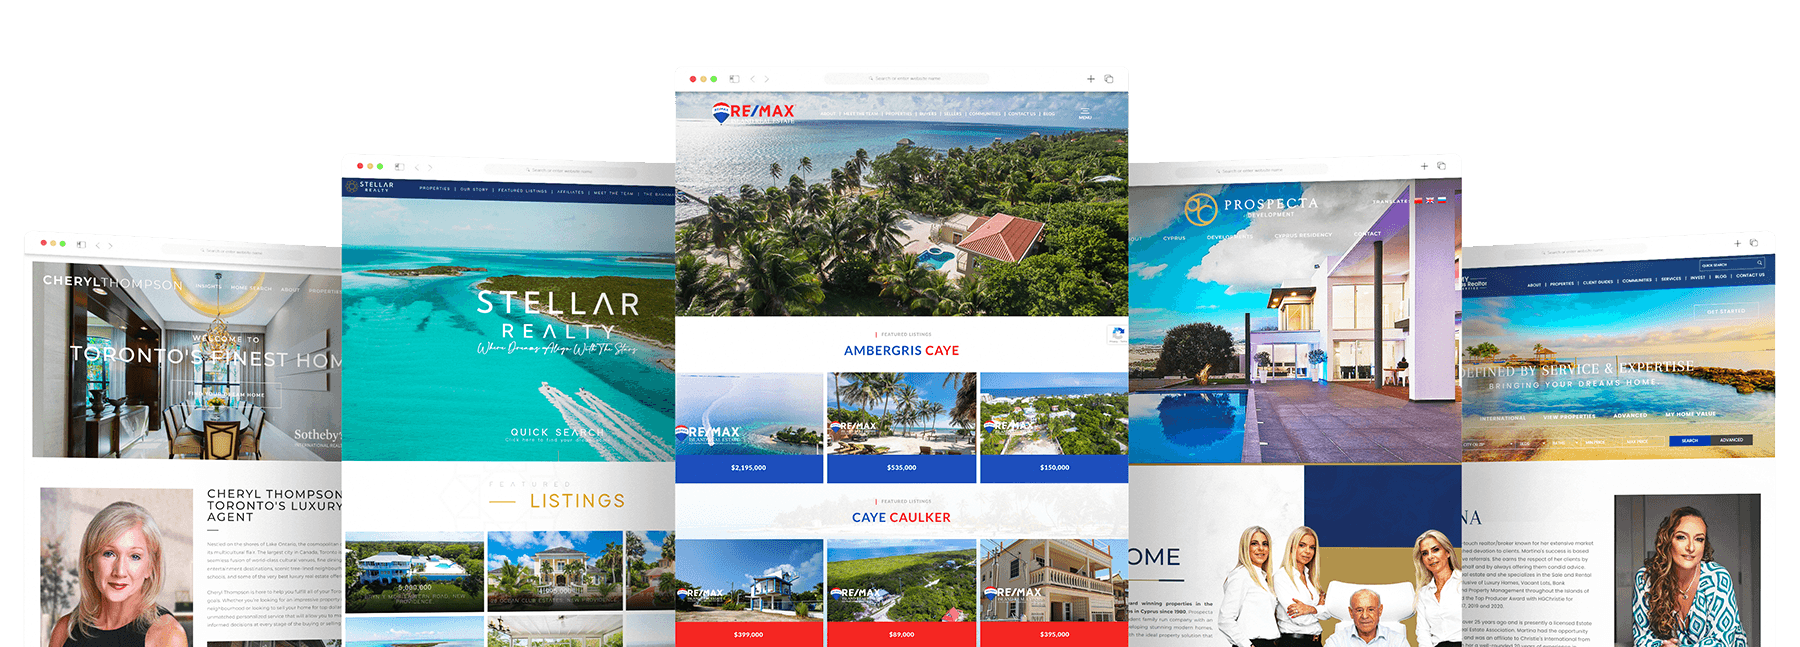 10 Best International Real Estate Websites screenshots